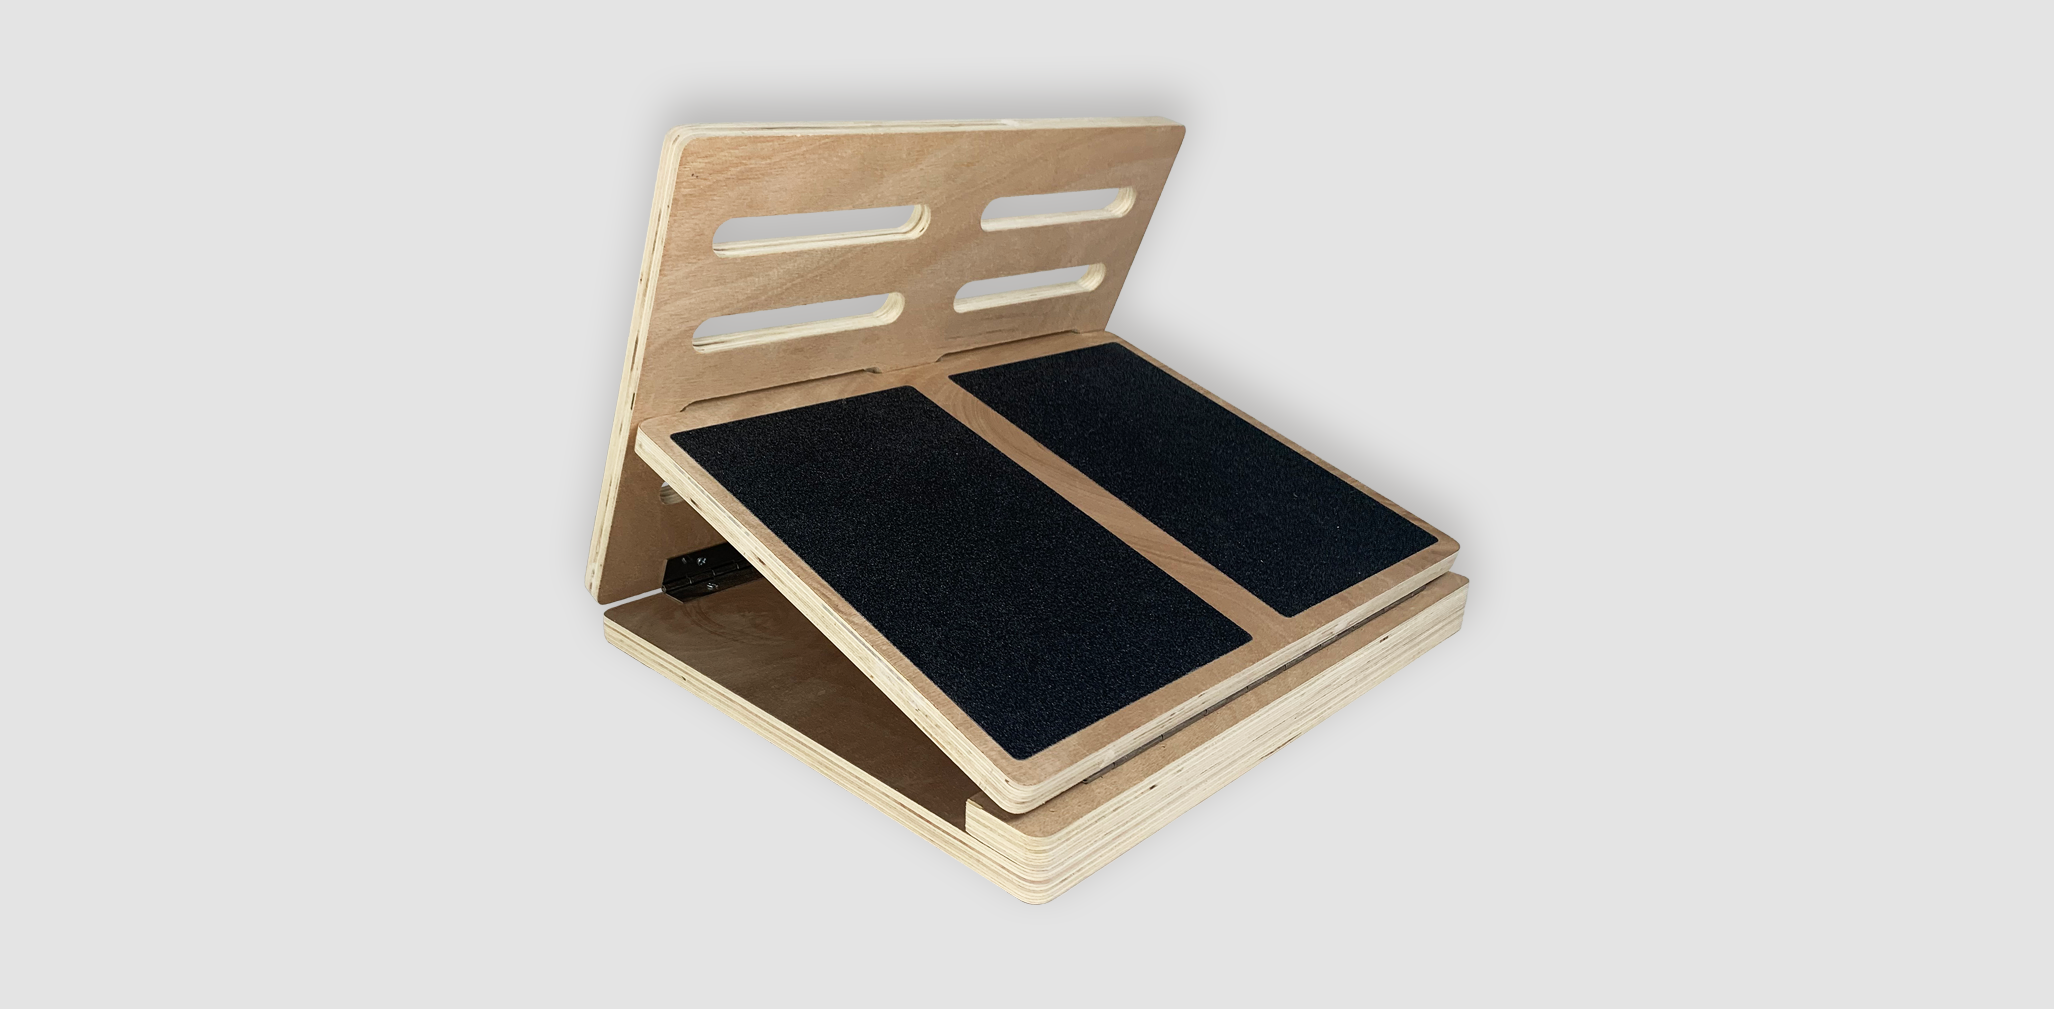 Adjustable wooden incline board